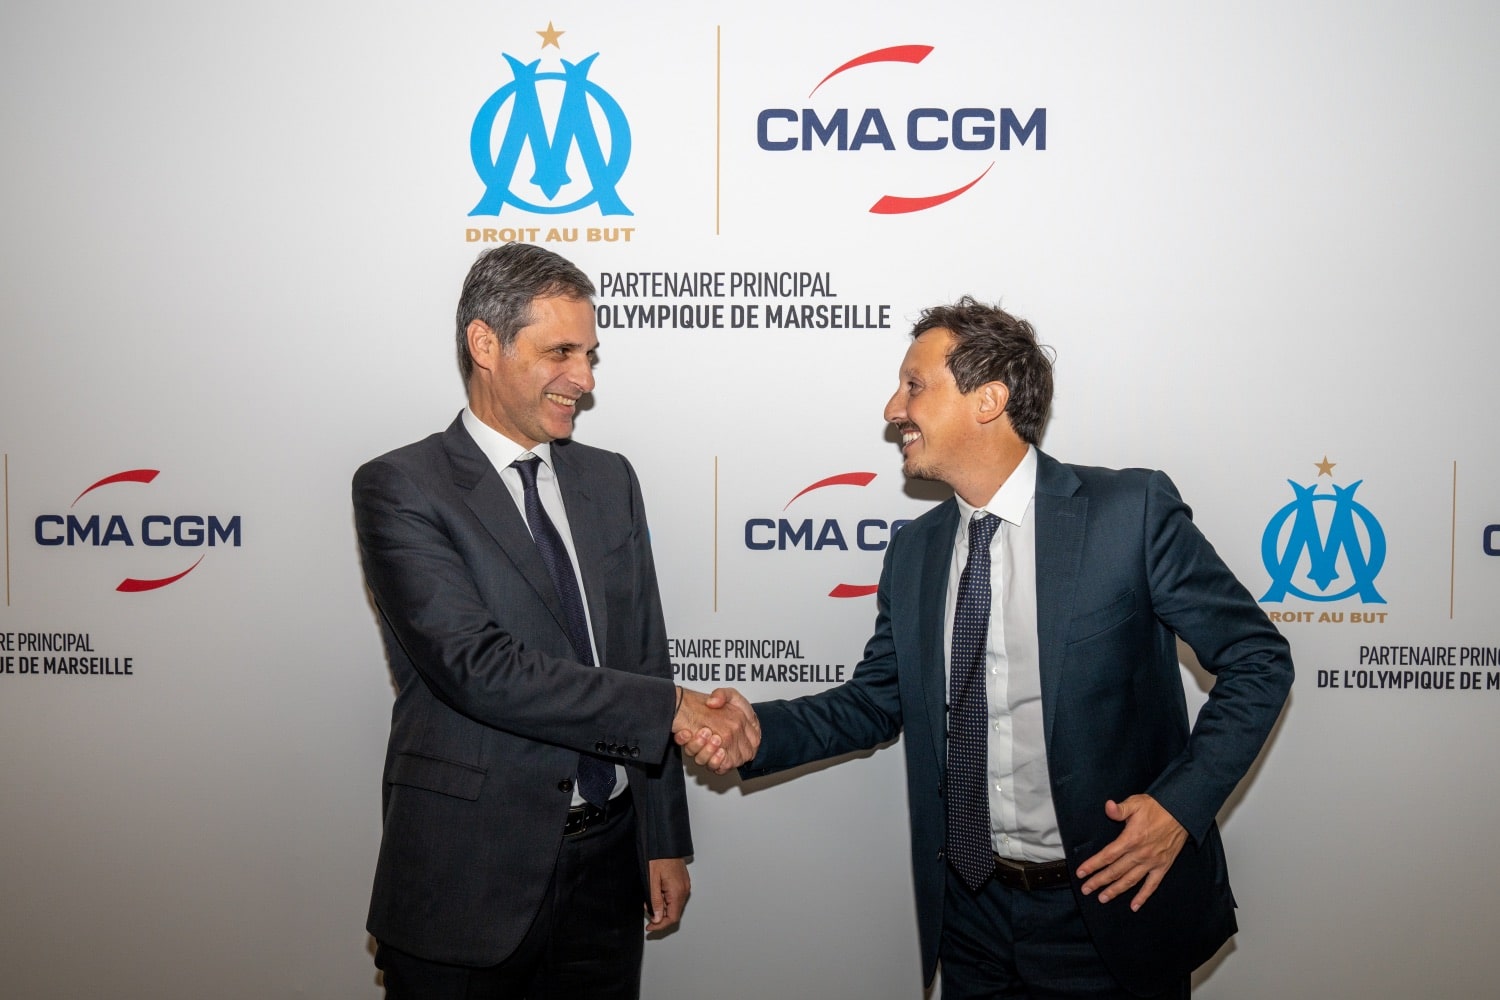 CMA CGM, CMA CGM nouveau partenaire de l’Olympique de Marseille, Made in Marseille